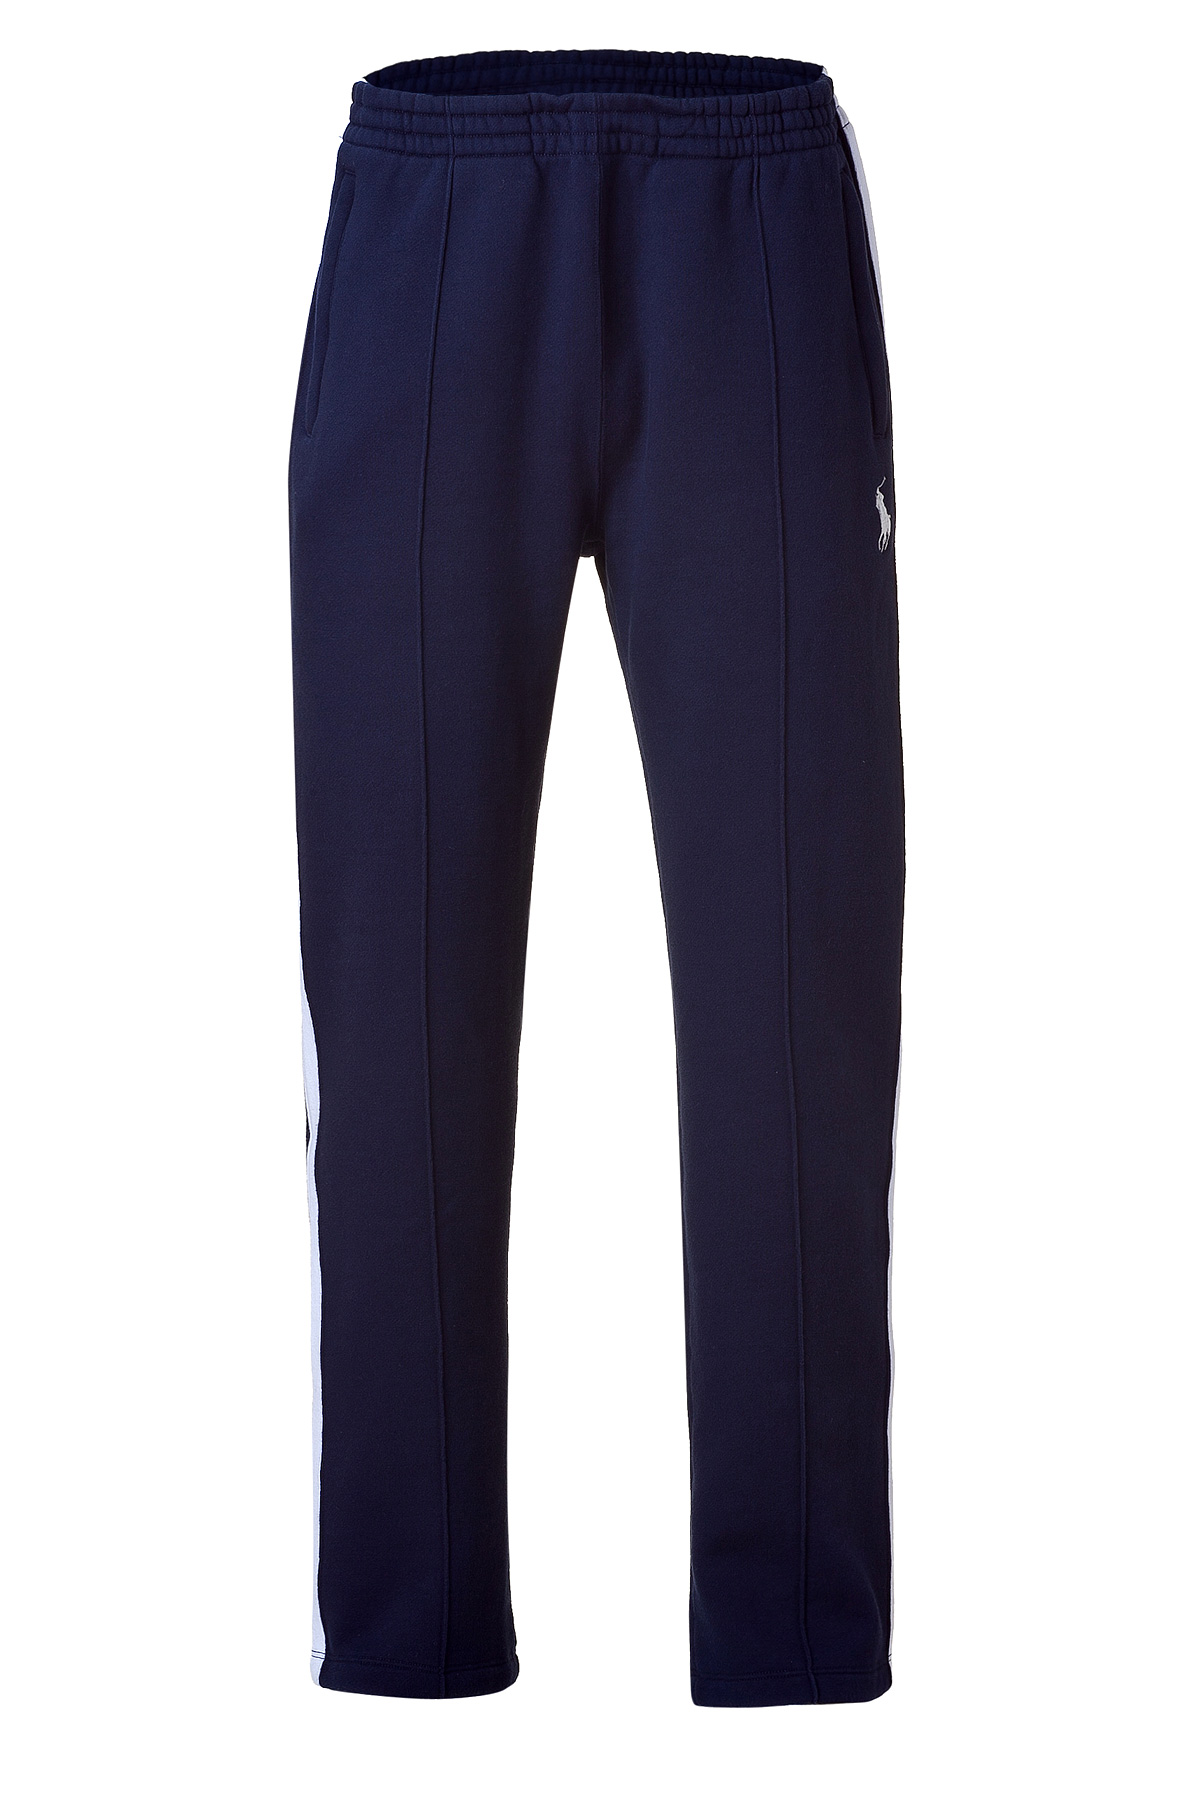 Polo Ralph Lauren French Navy Athletic Fleece Pants in Blue for Men ...